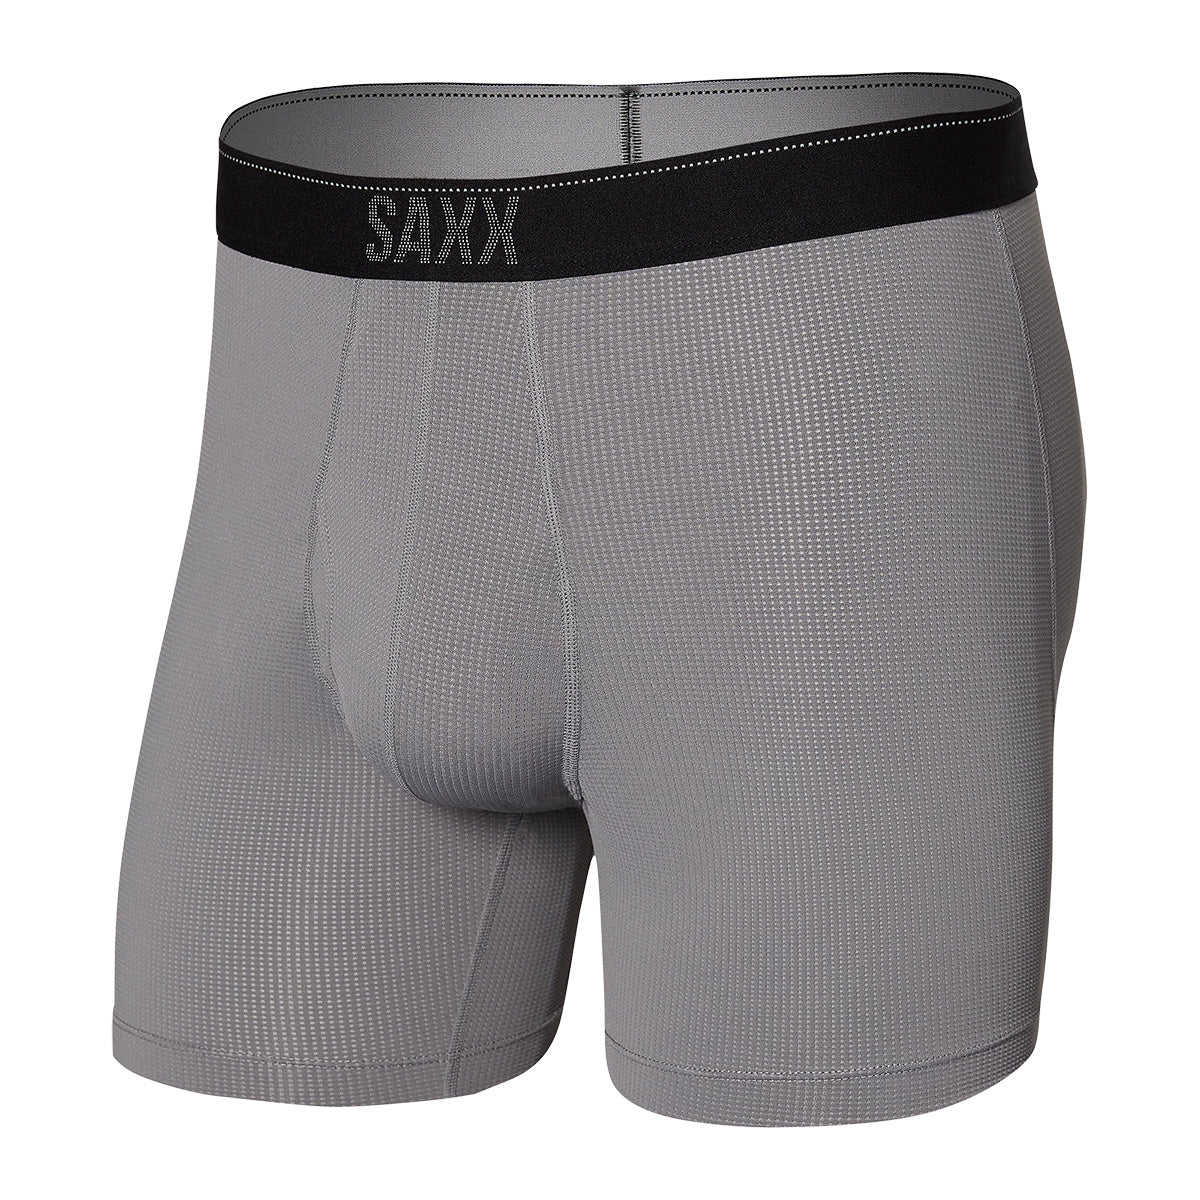 Saxx Quest Boxer Camo Brief - John Bull Clothing